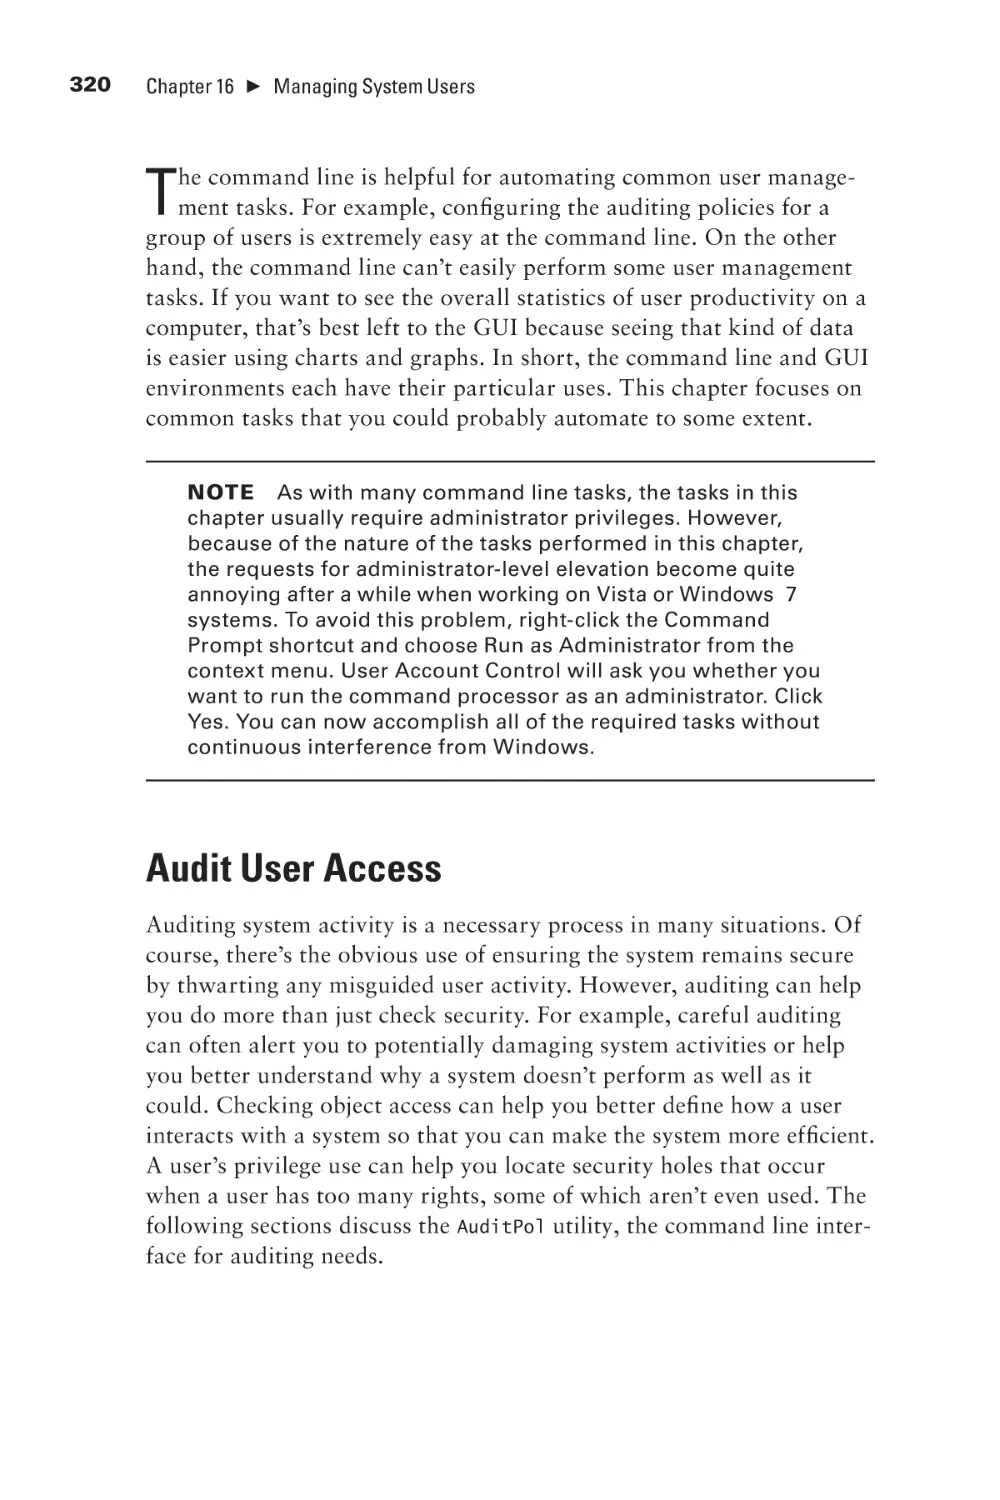 Audit User Access